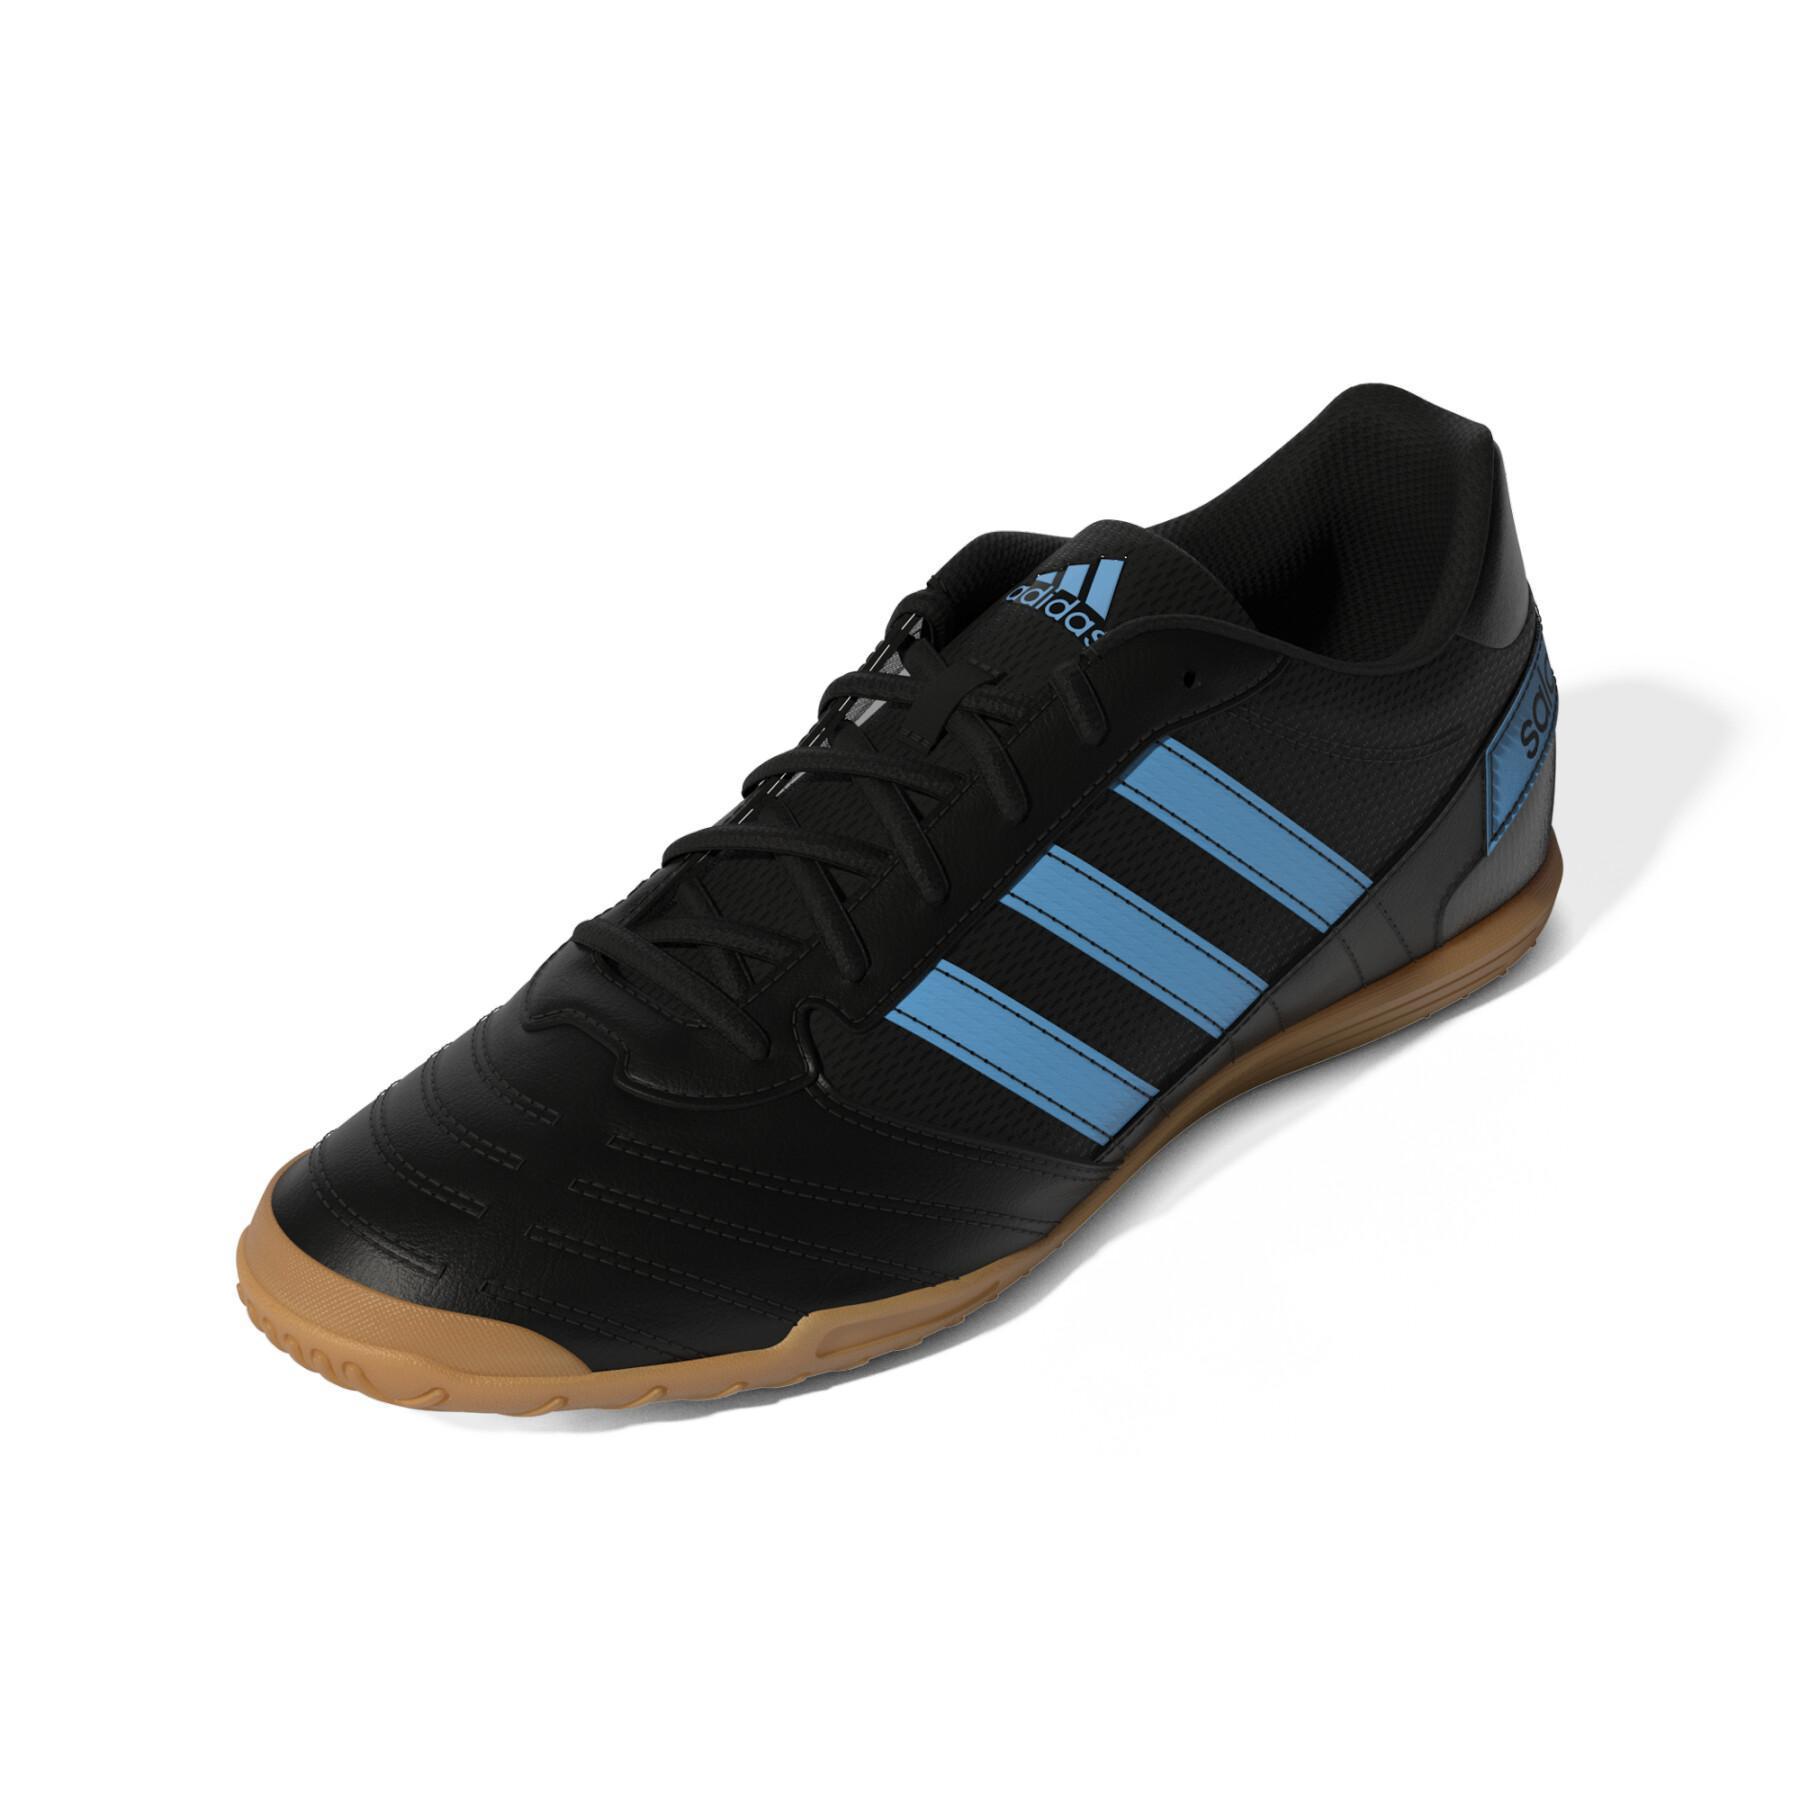 Chaussures de football adidas Super IN Sala